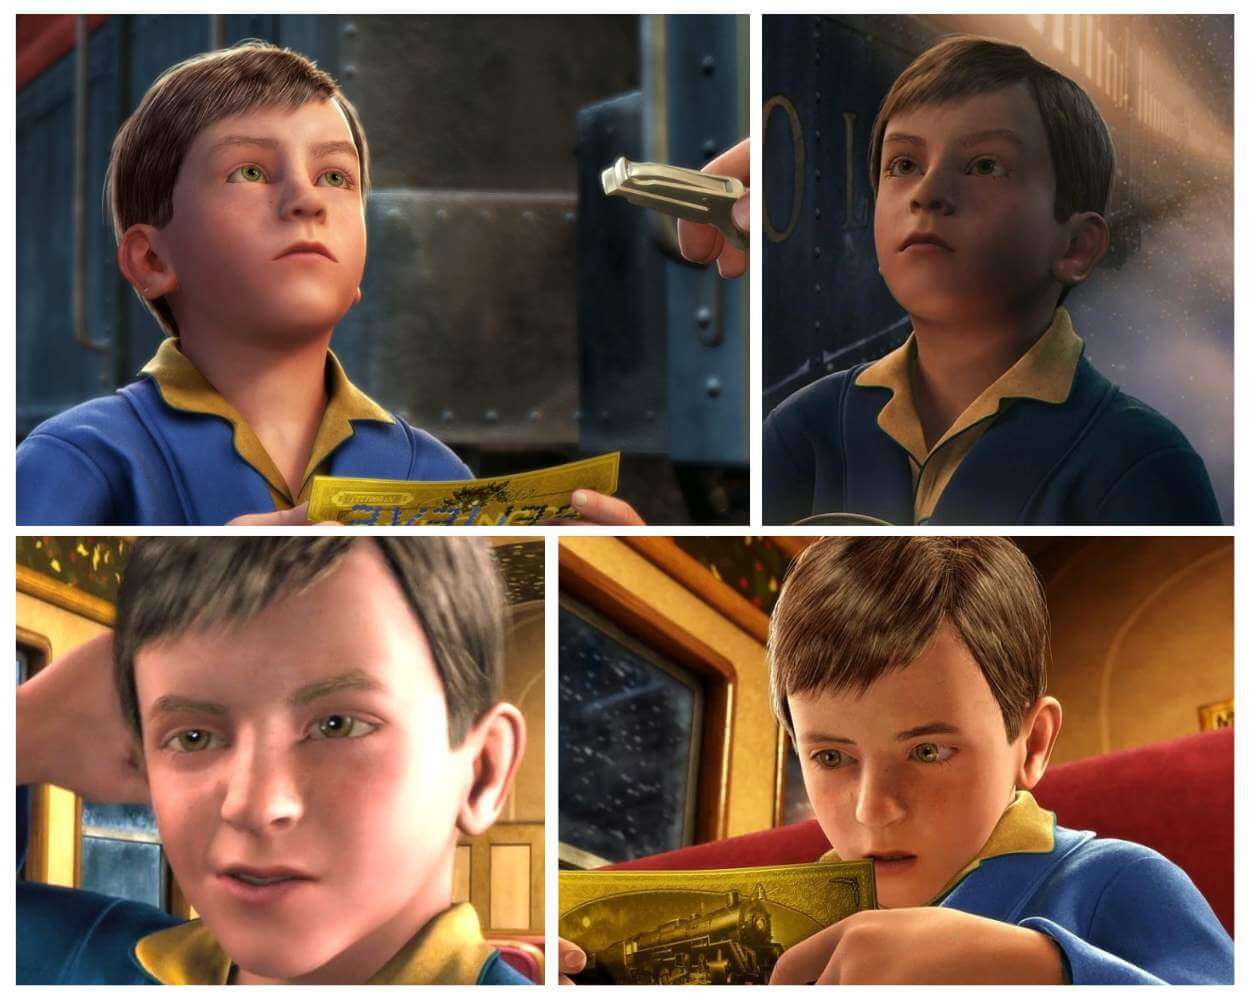 Hero Boy - Voiced by Tom Hanks